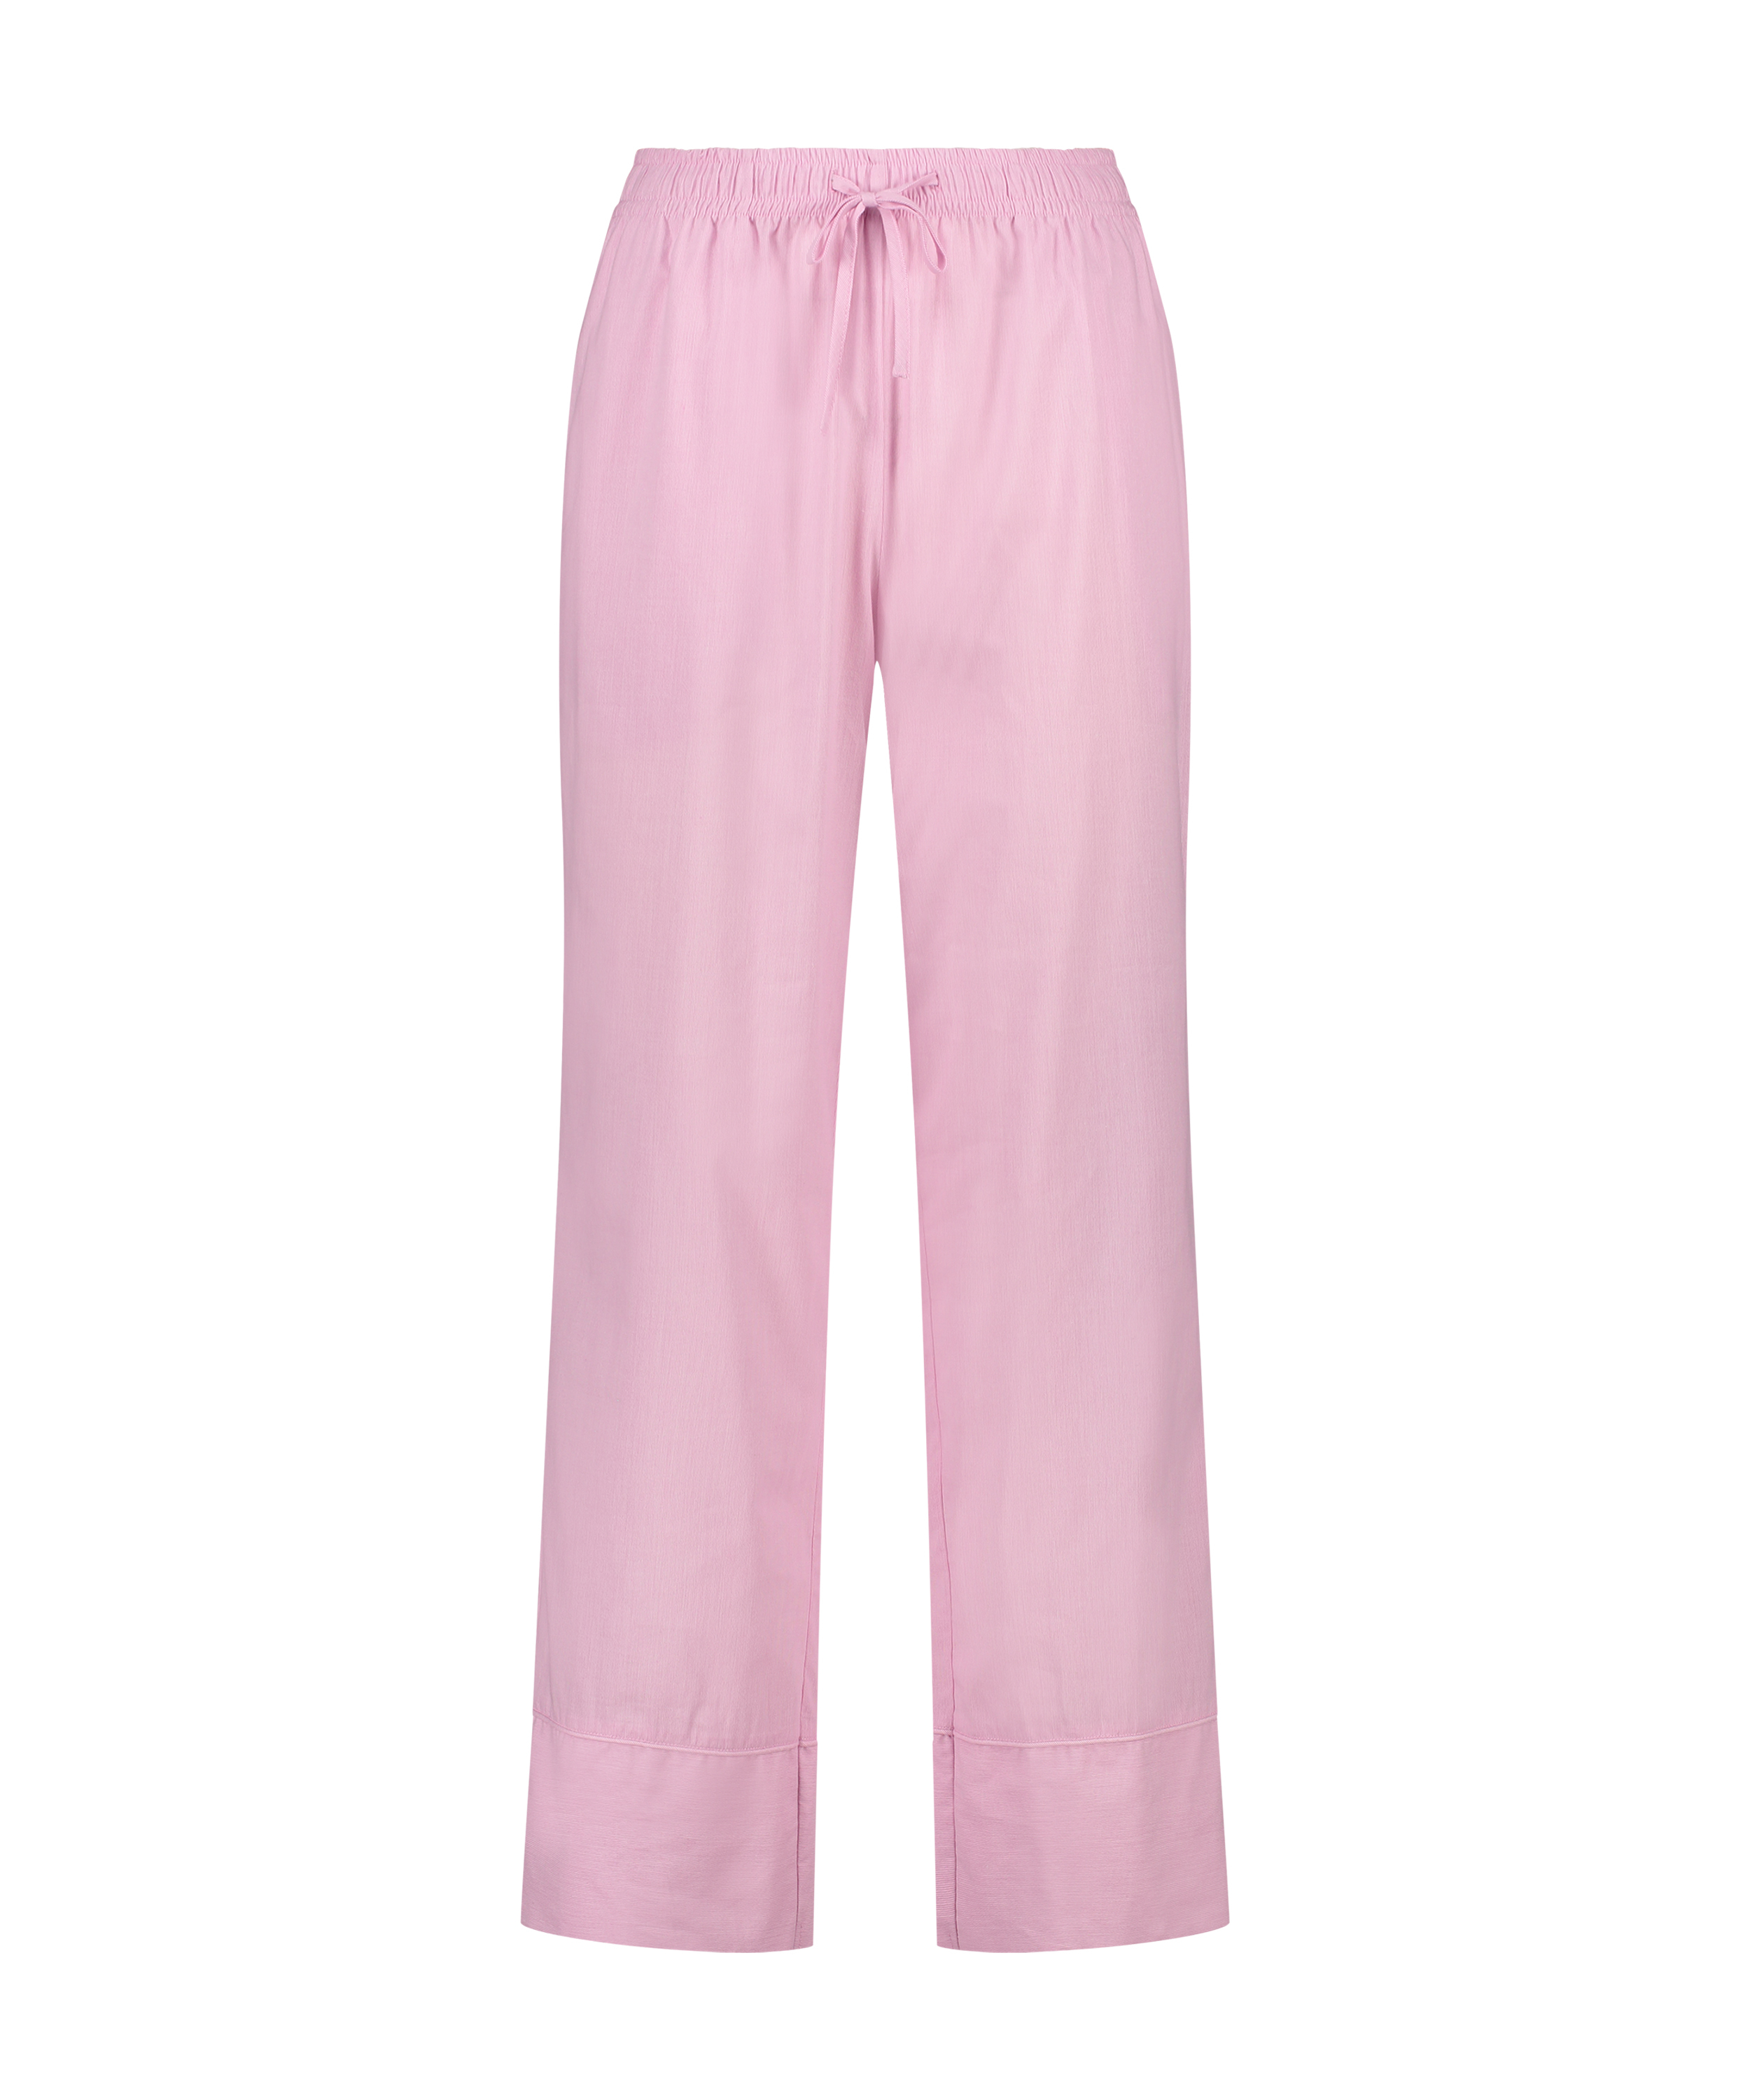 Cotton Pants, Pink, main